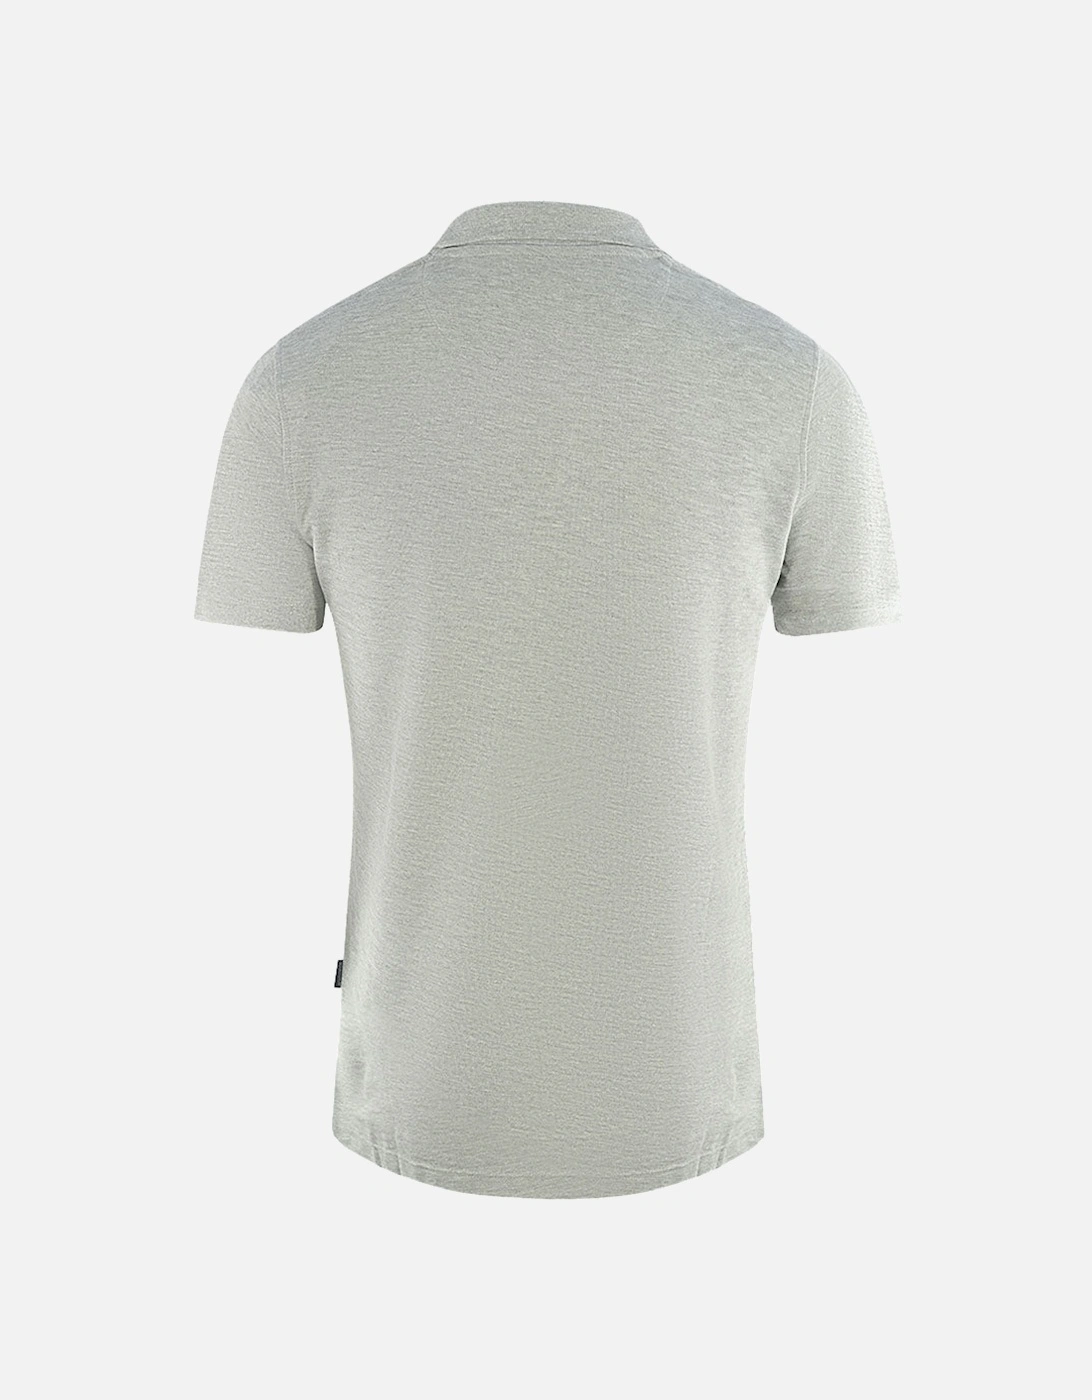 London Crest Grey Polo Shirt